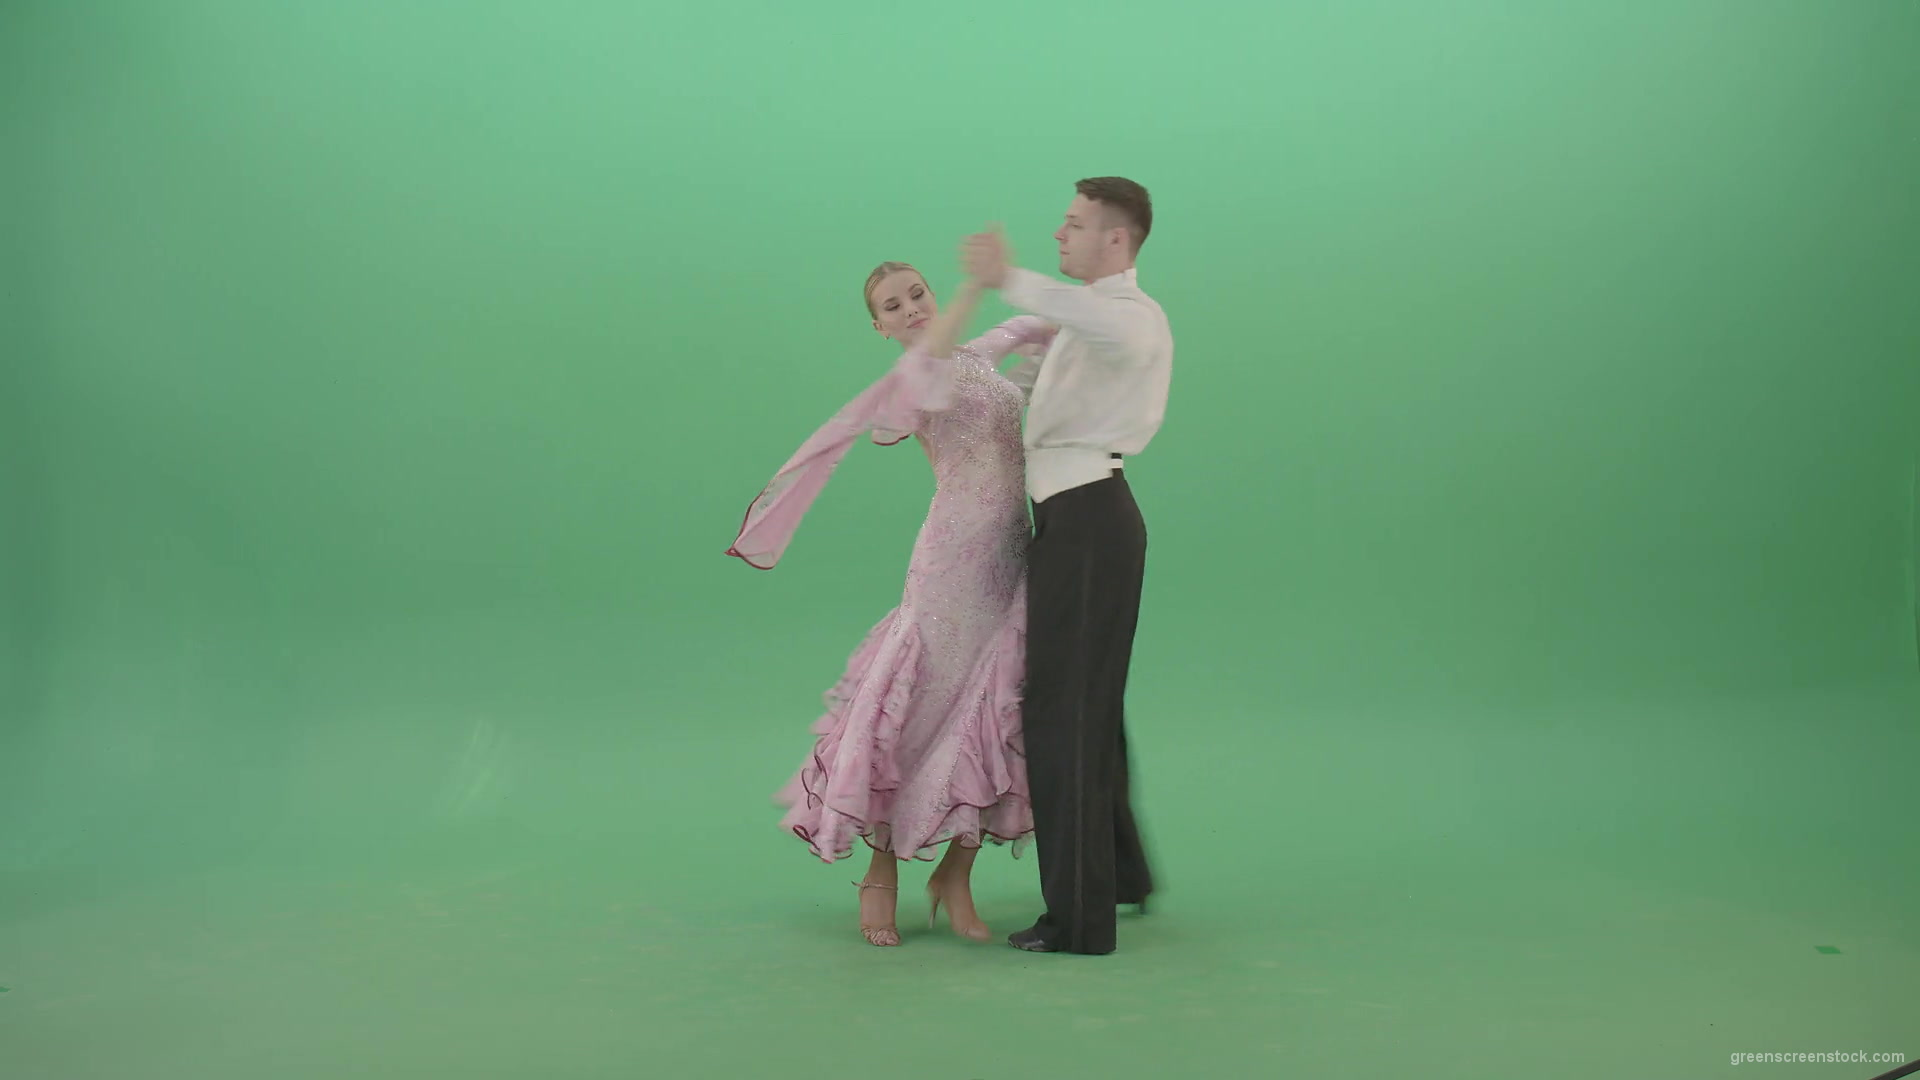 Wedding-Lovely-couple-spinning-in-green-screen-studio-dancing-ballroom-valse-4K-Video-Footage-1920_008 Green Screen Stock